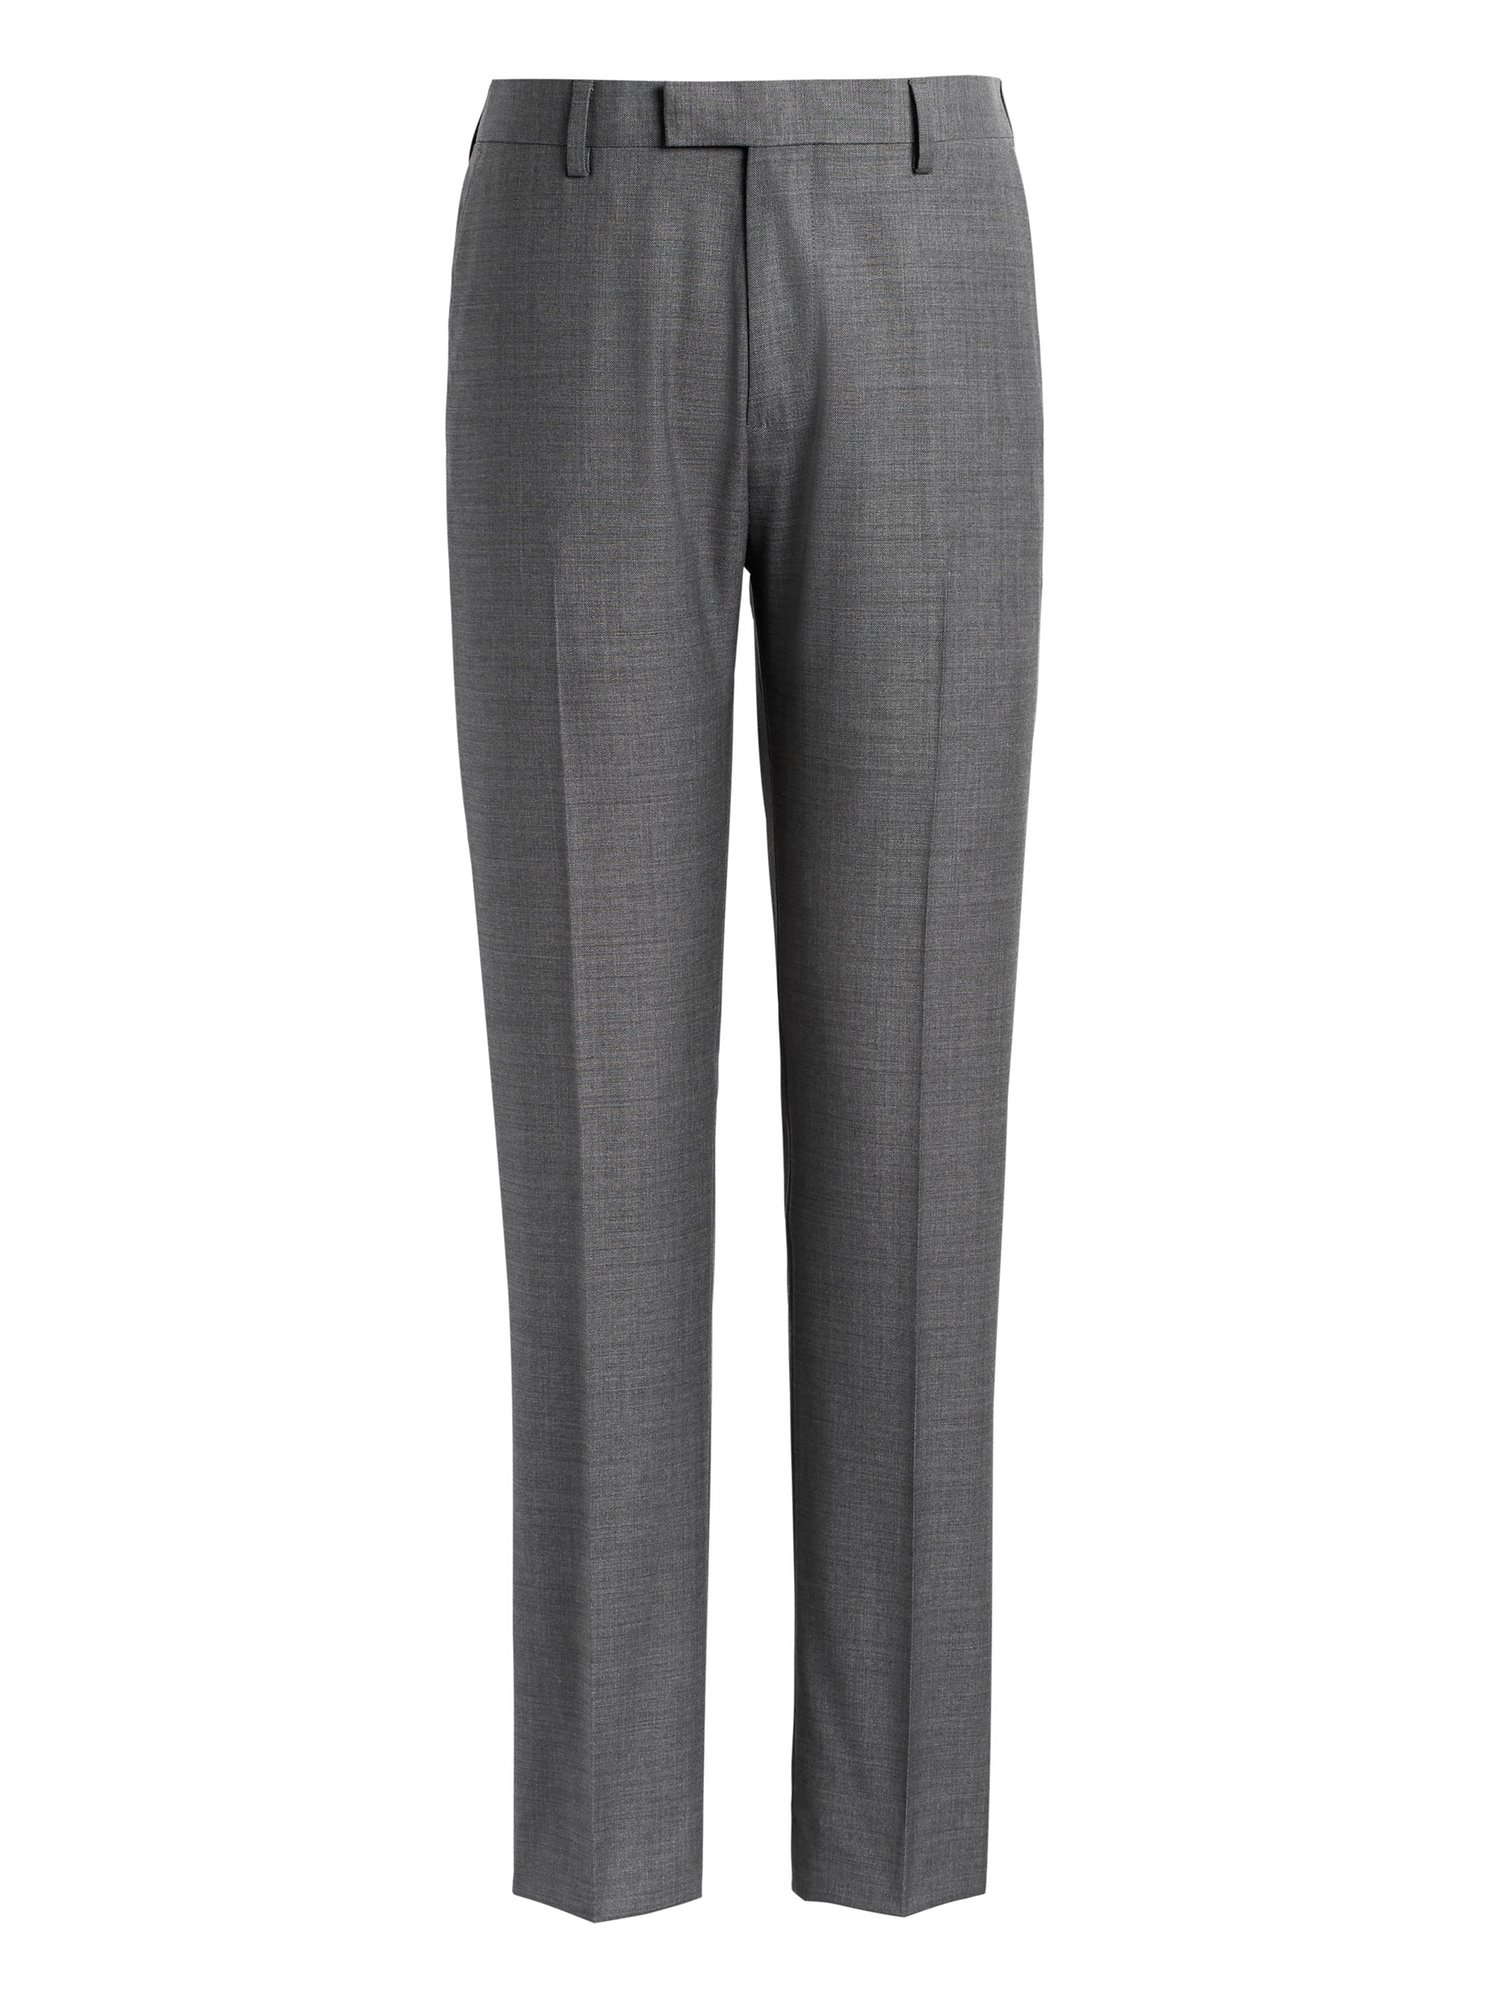 Extra-Slim Italian Wool Suit Pant